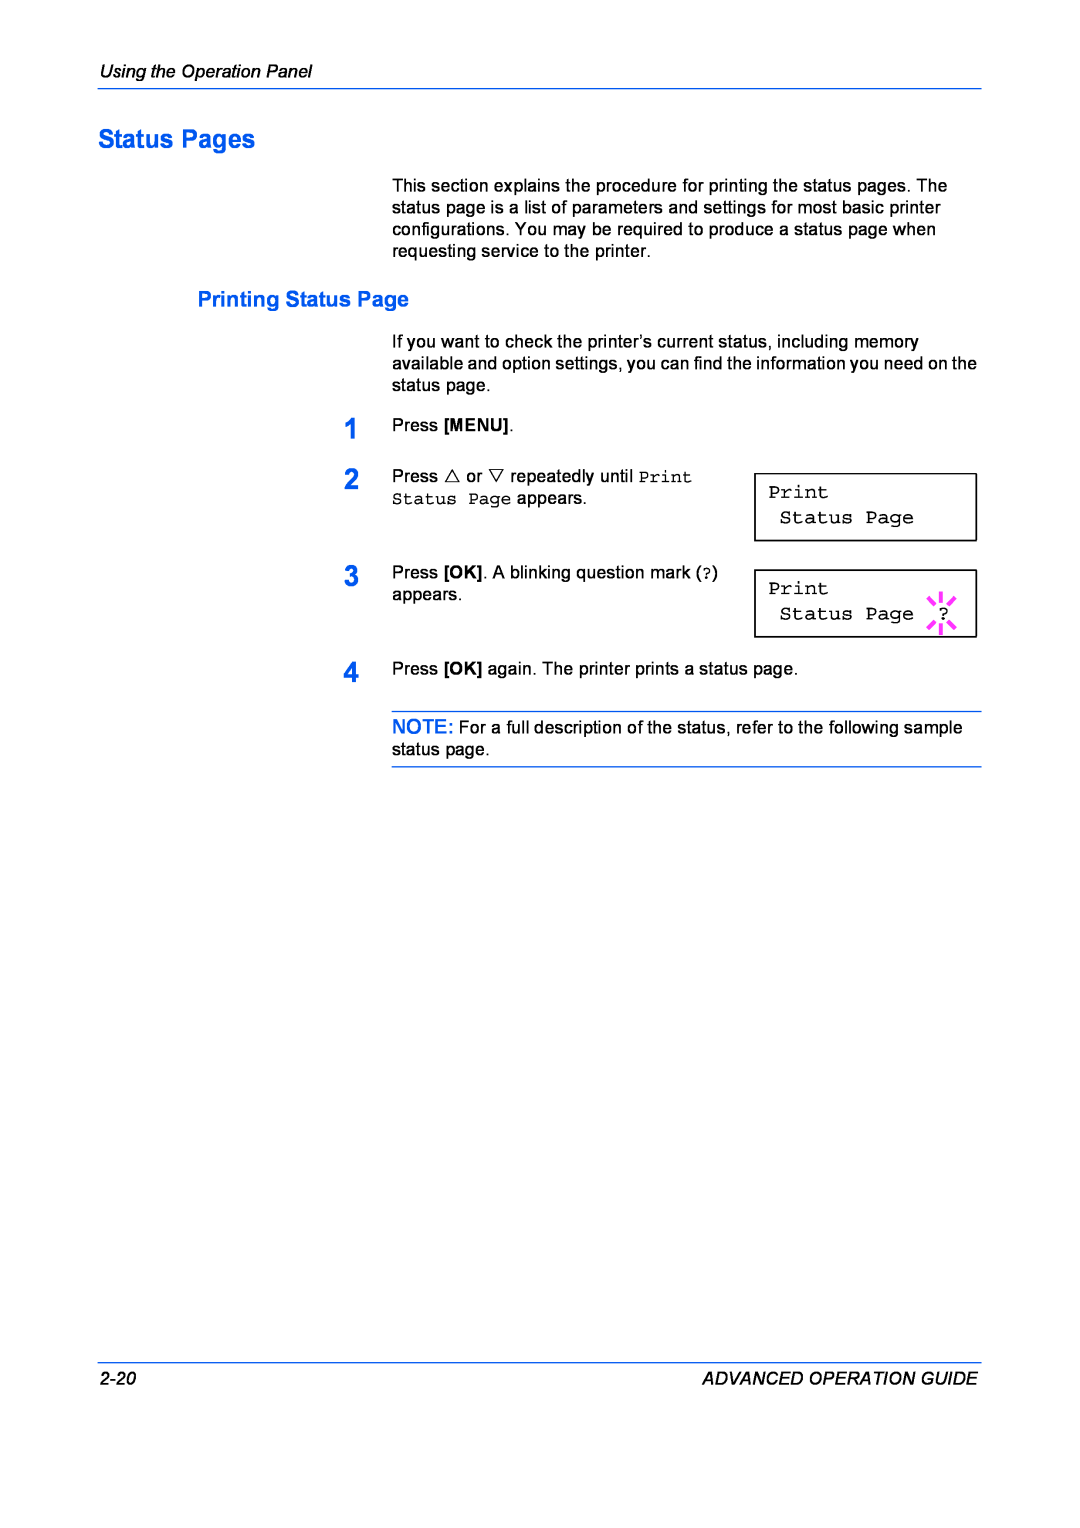 Kyocera 9530DN manual Status Pages, Printing Status Page, Print Status Page Print Status Page ? 